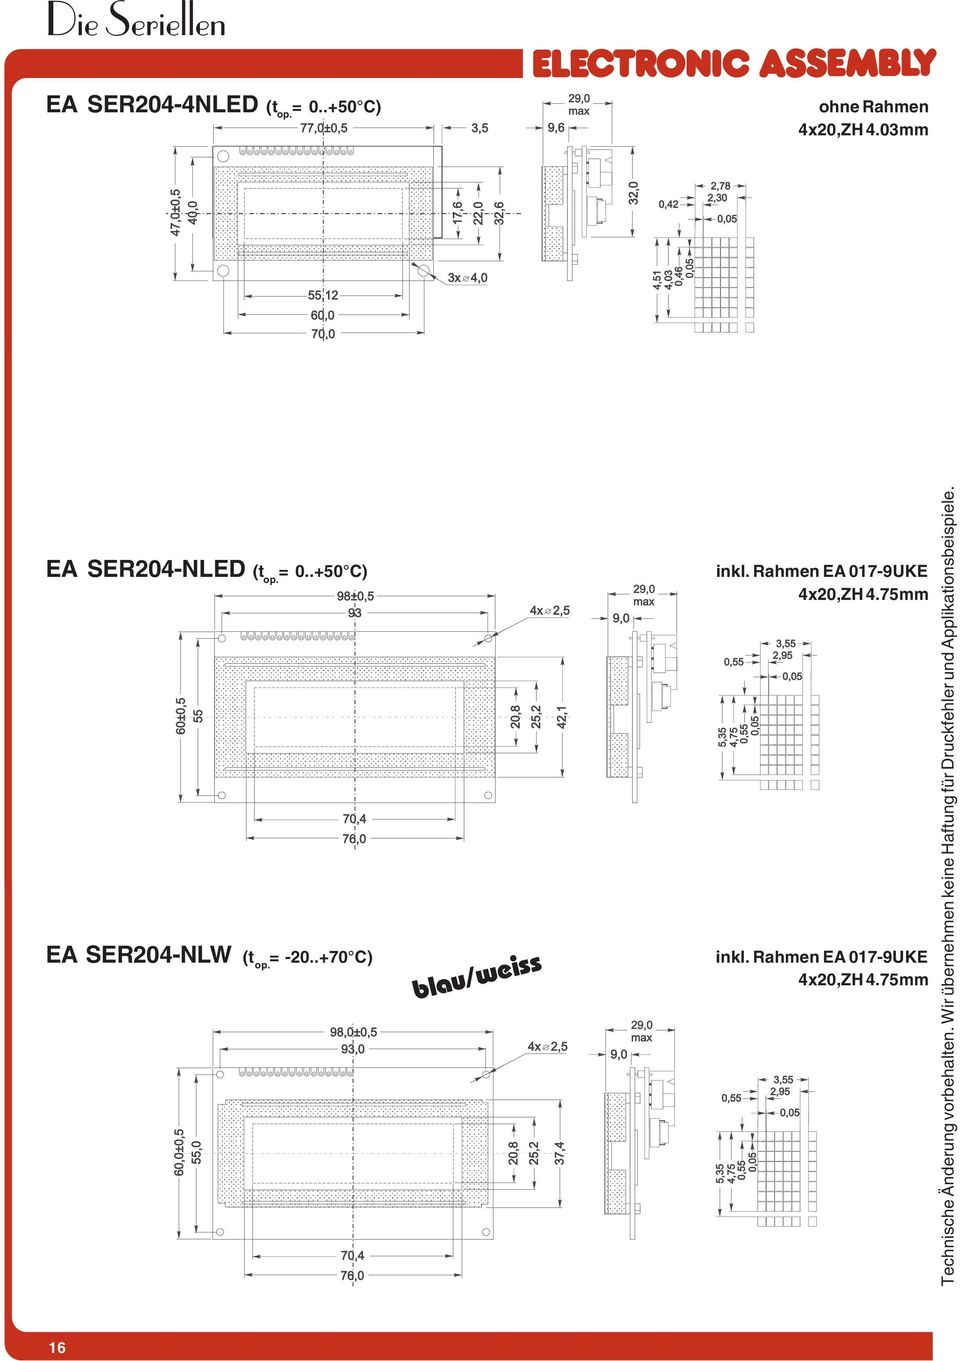 blau/weiss inkl. Rahmen EA 017-9UKE 4x20,ZH 4.